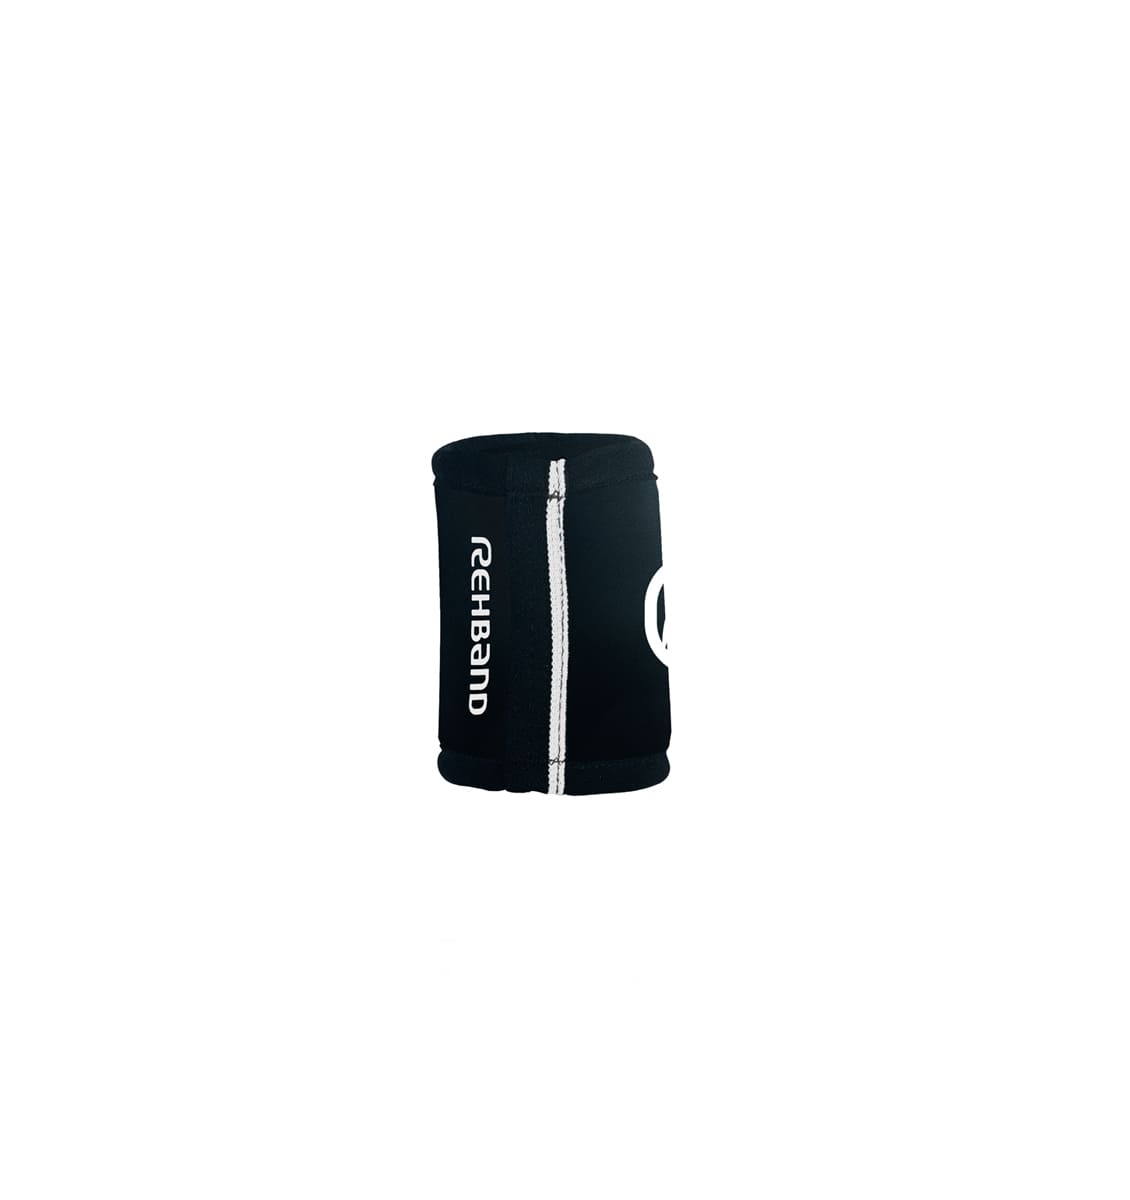 101306-01 - Rehband Rx Wrist Support - Black - 5mm - Side